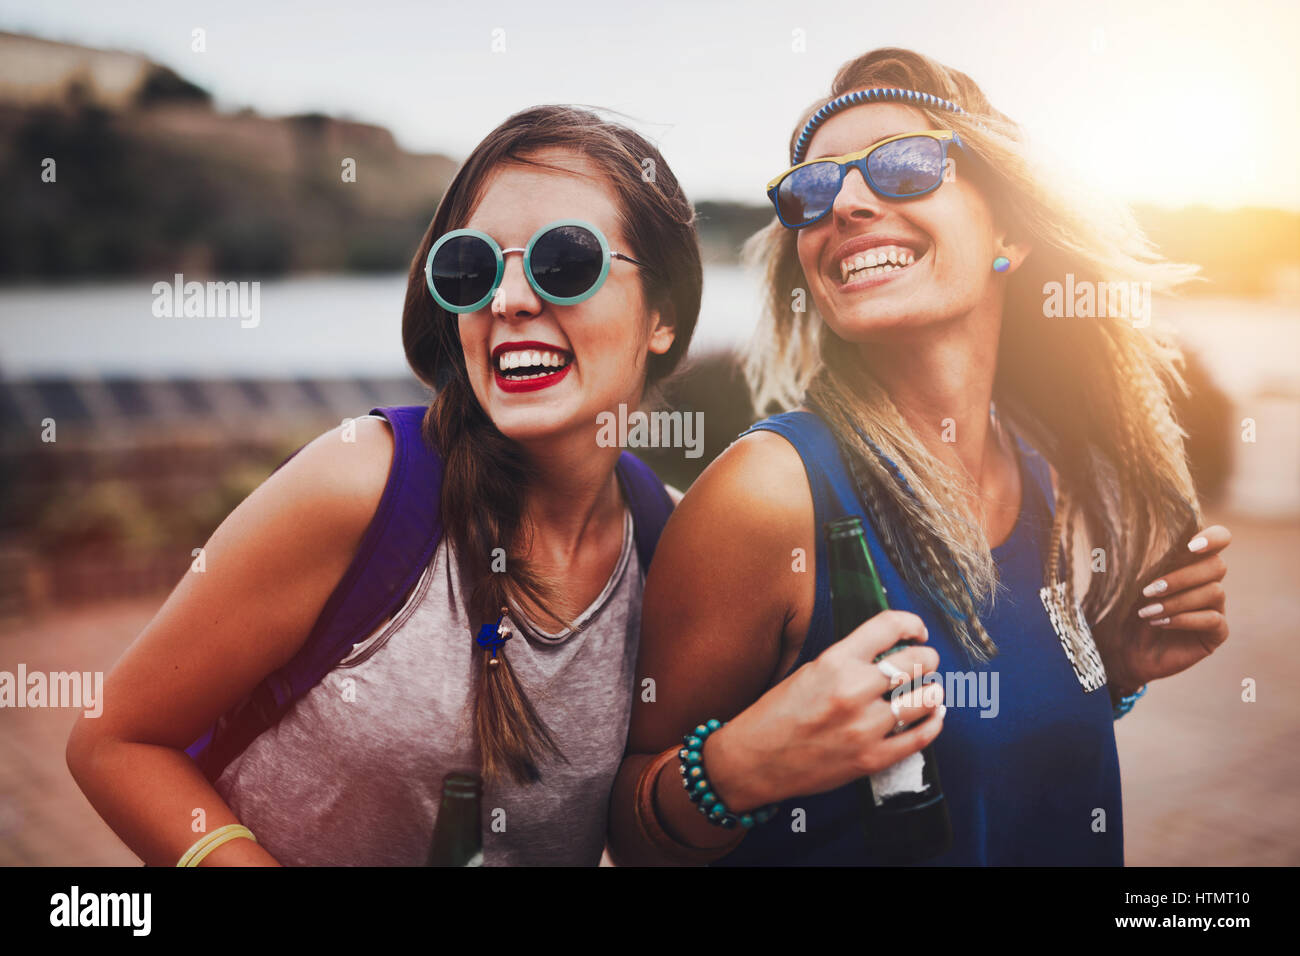 Party girls enjoying summer freedom and festival fun Stock Photo